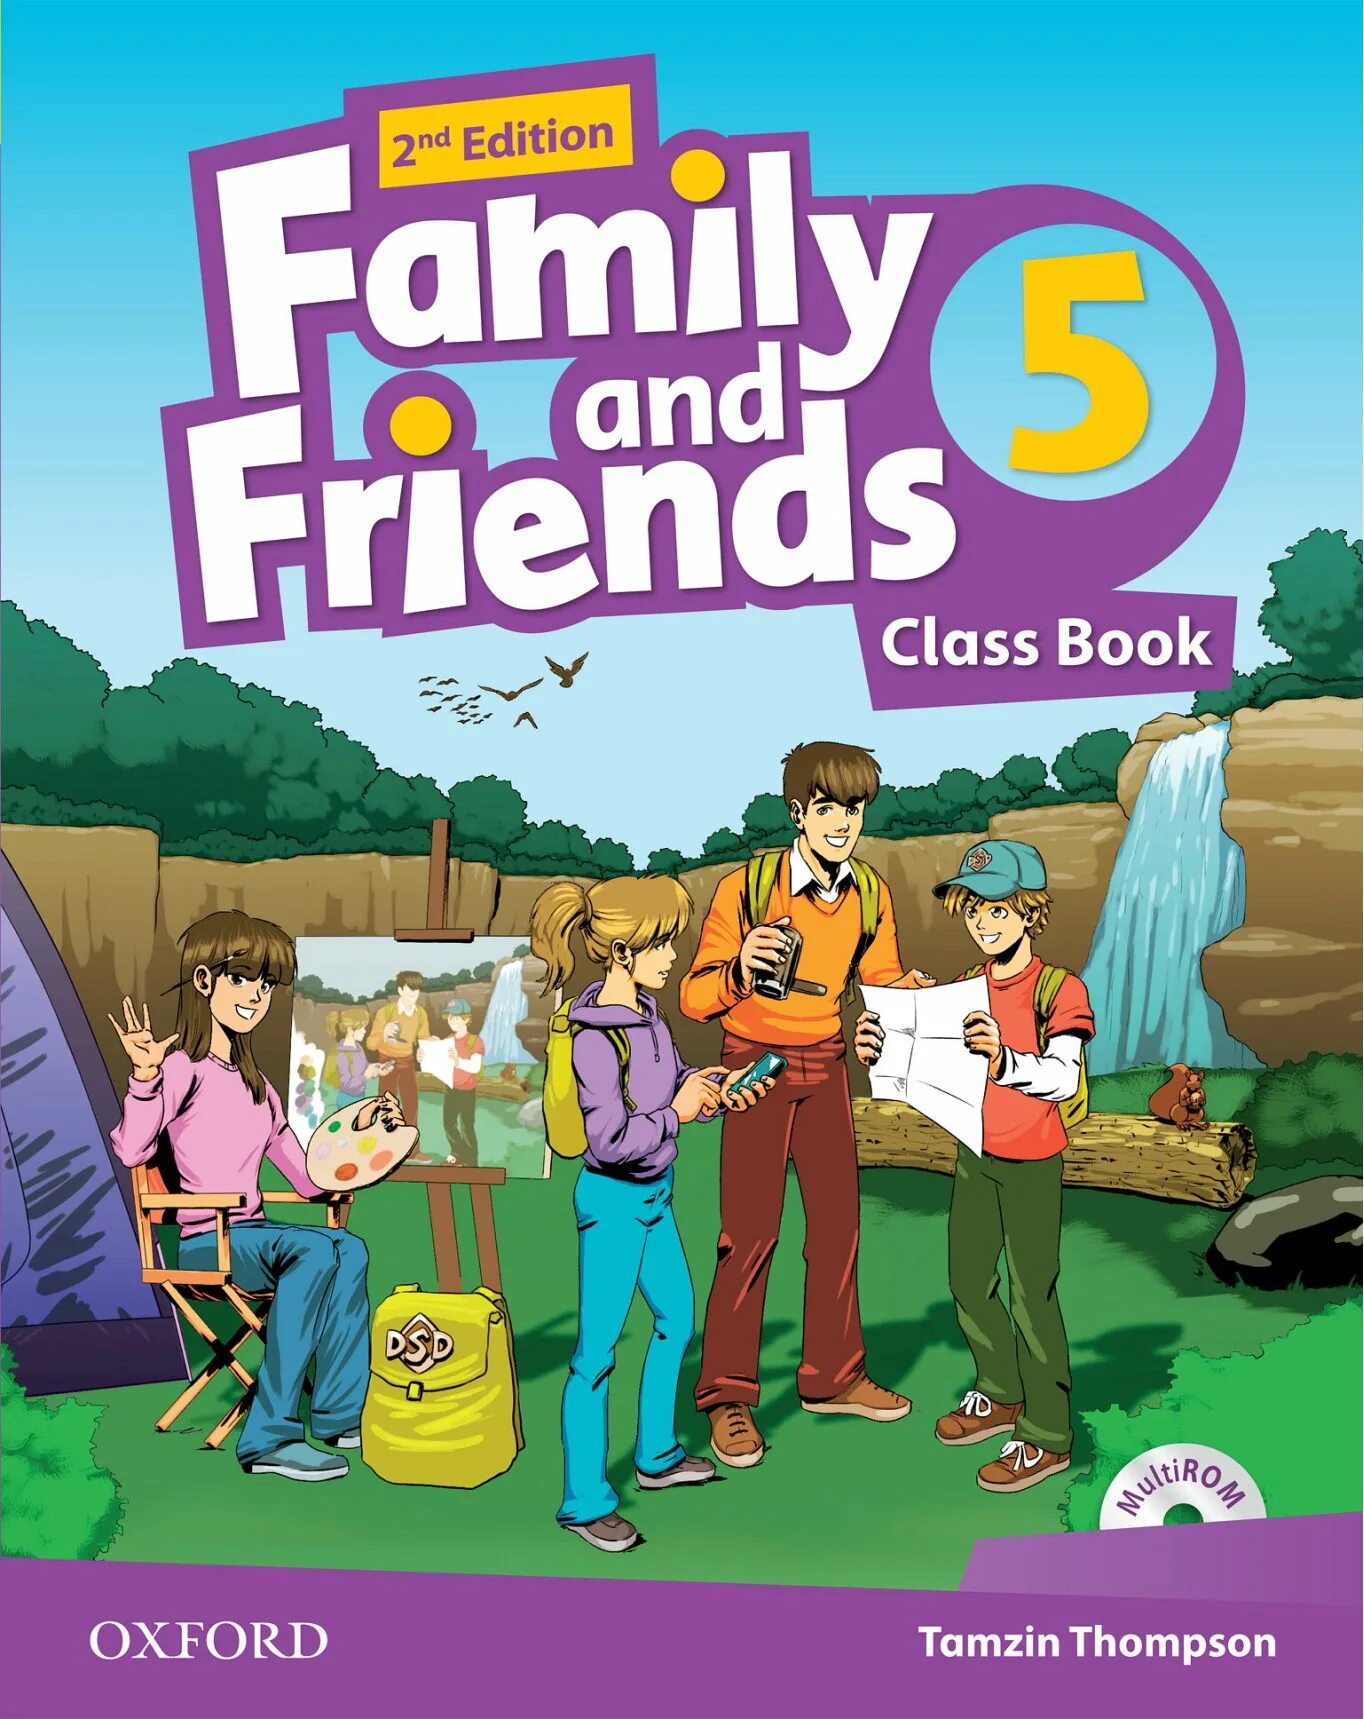 Учебник Family and friends 5. Фэмили френдс 6. \Фэмили энд френдс 2 издание. Family and friends 3 2nd Edition. Family and friends projects